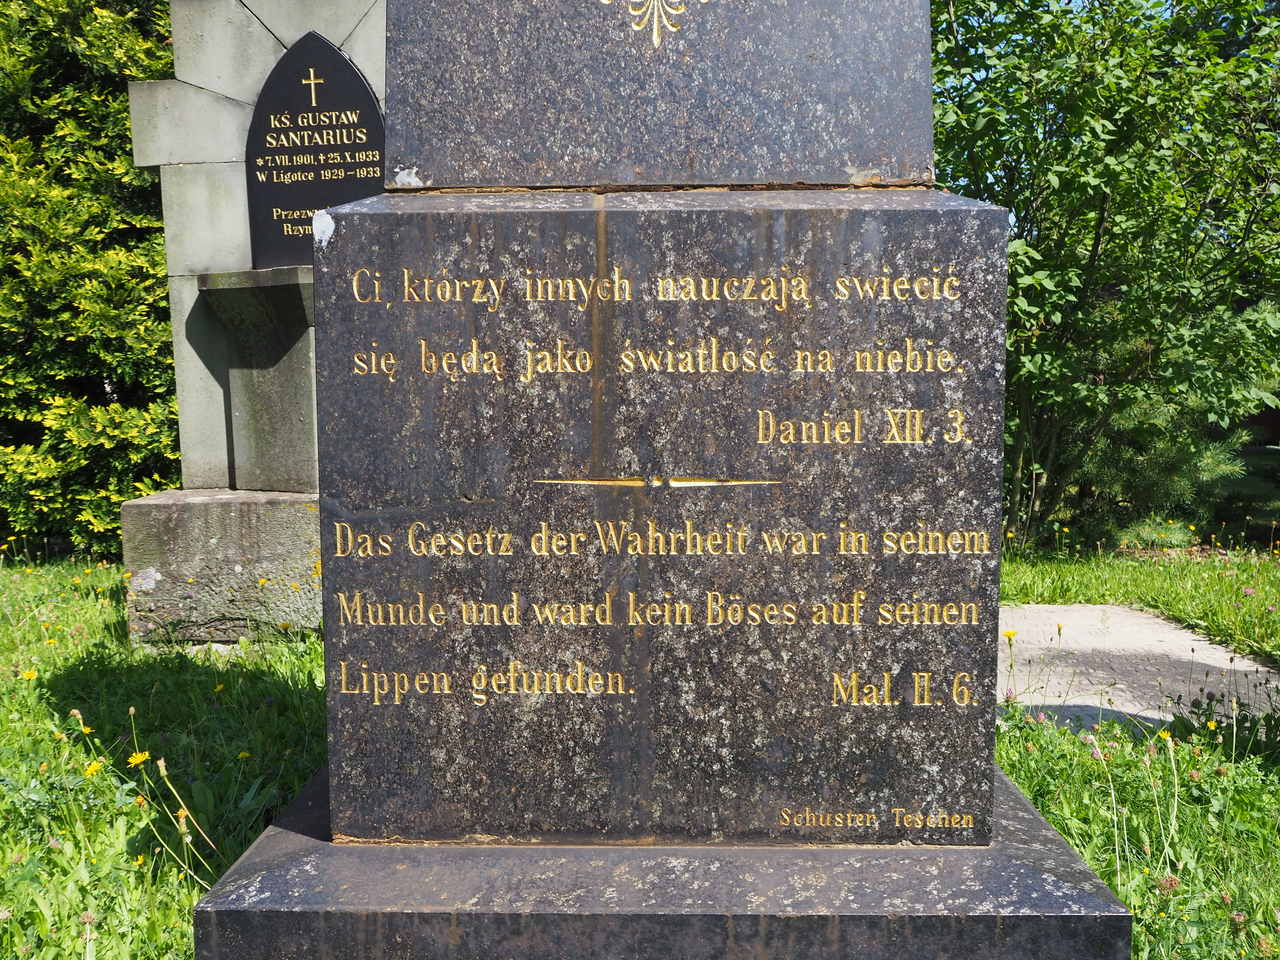 Fragment of a tombstone of Jerzy Heczko, cemetery in Ligotka Kameralna, state from 2022